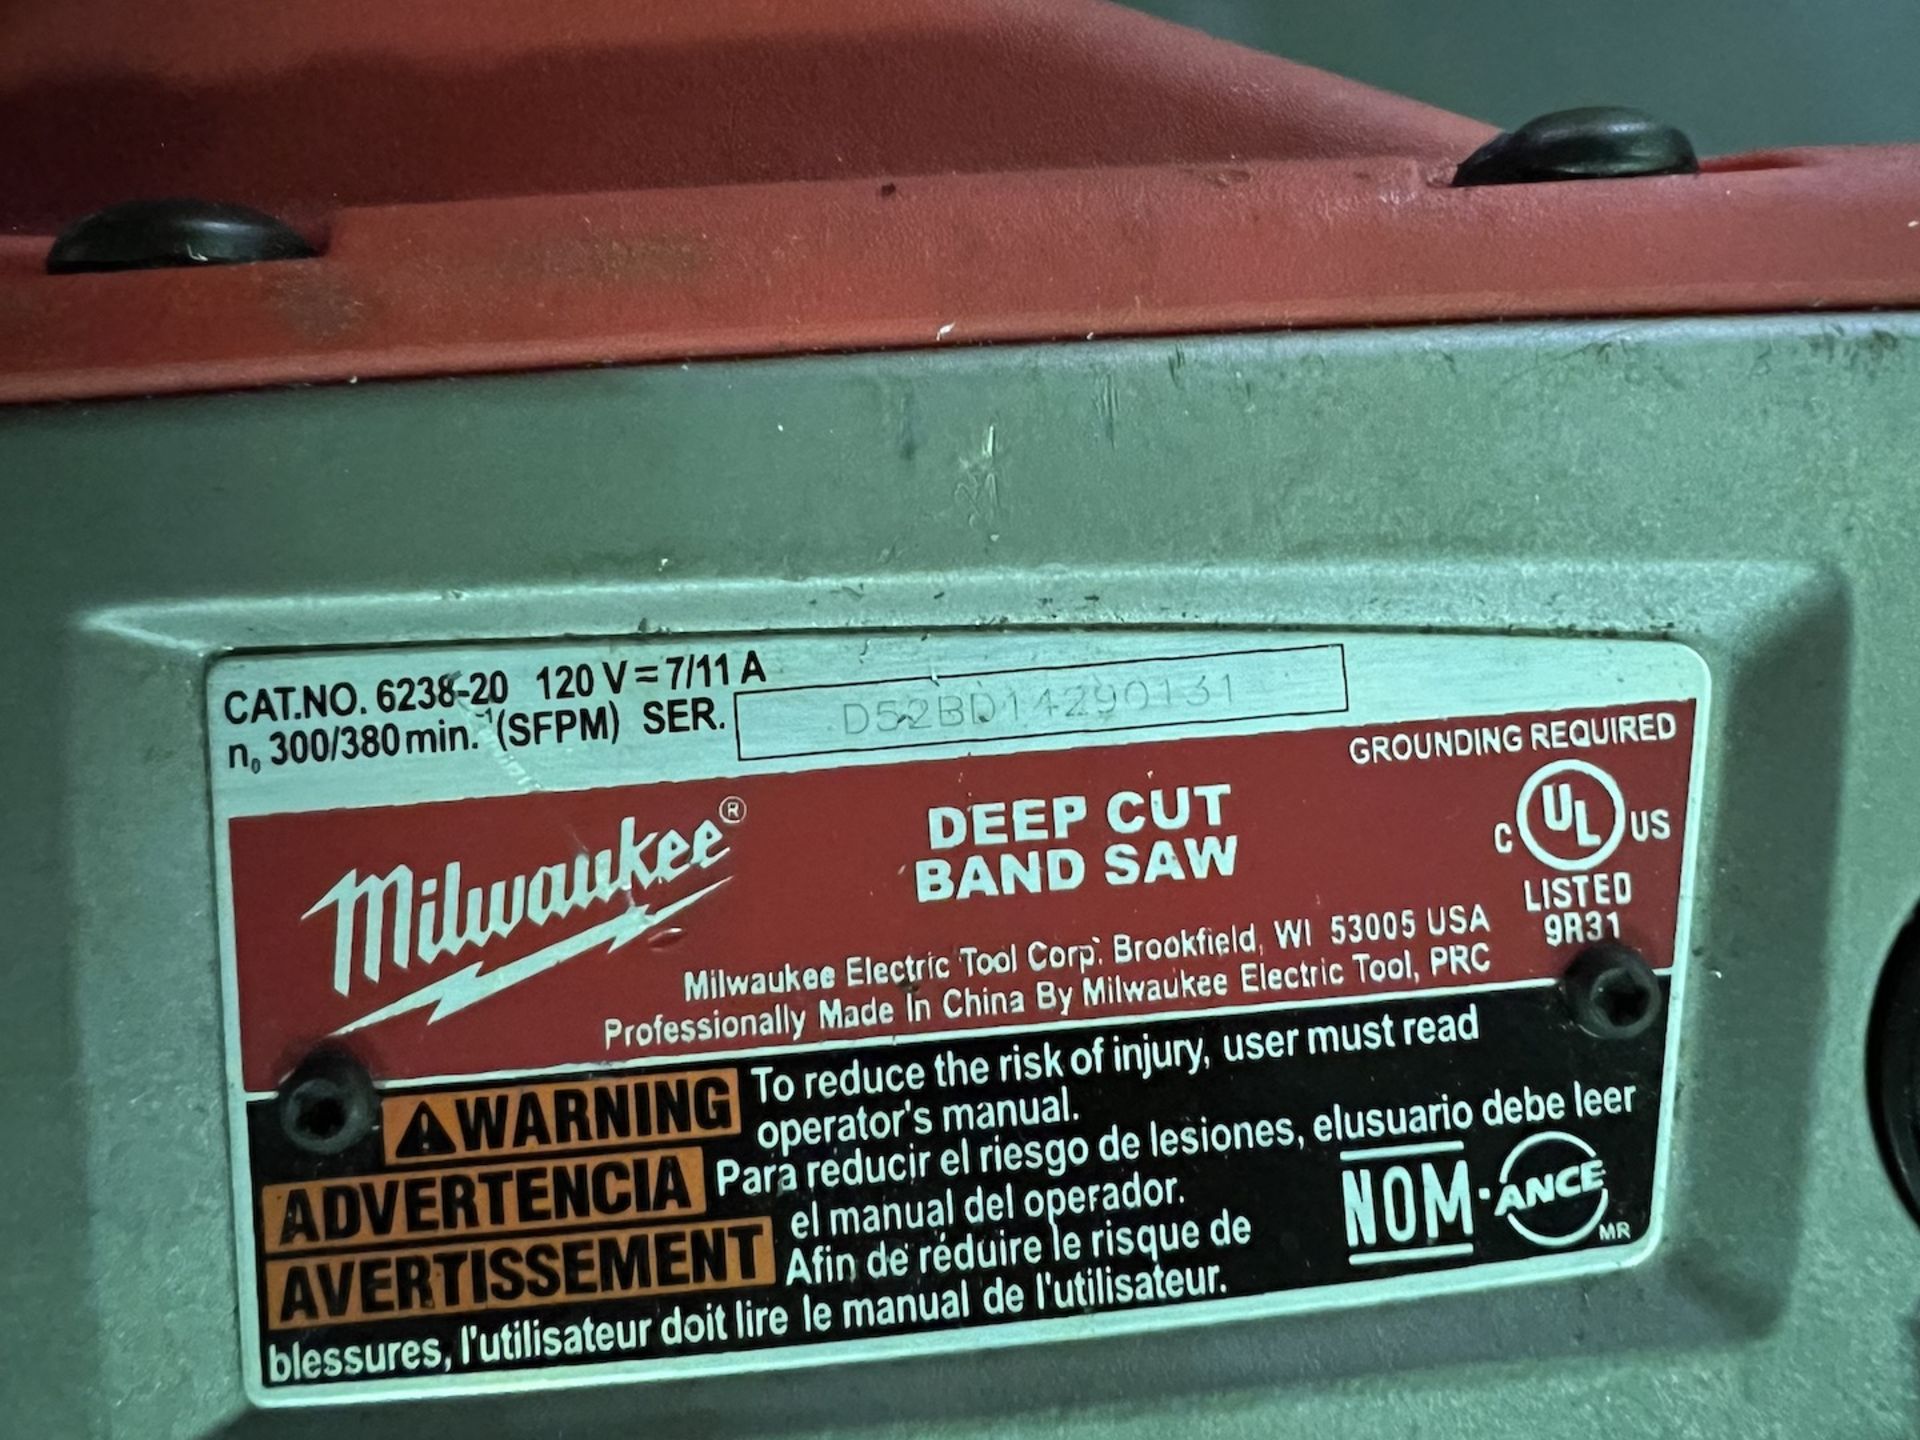 MILWAUKEE DEEP CUT BAND SAW, MODEL 6238-21, S/N D52BD14290131 - Image 9 of 12